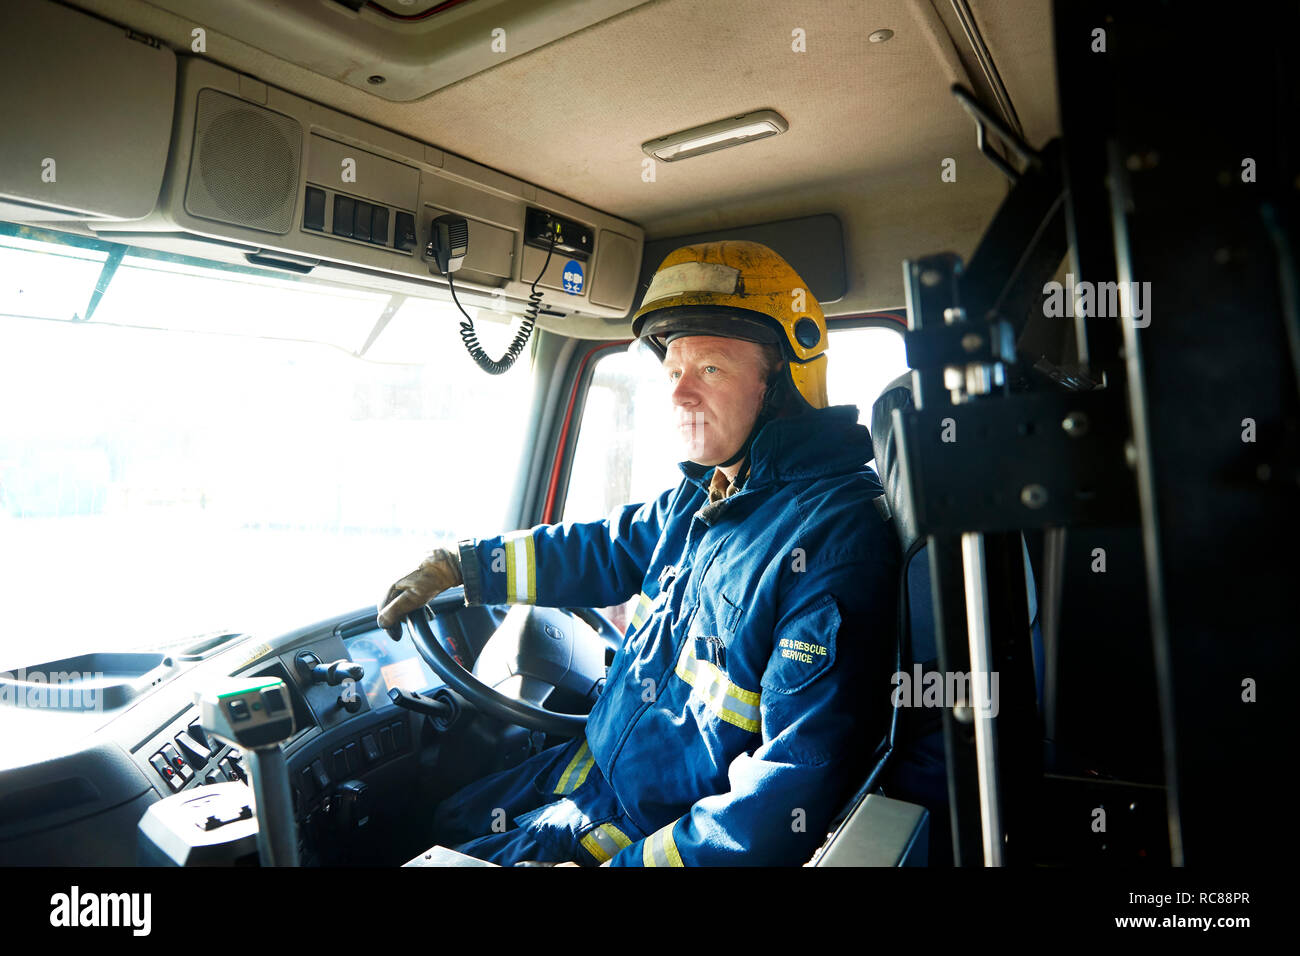 Fireman at wheel of fire engine Stock Photo